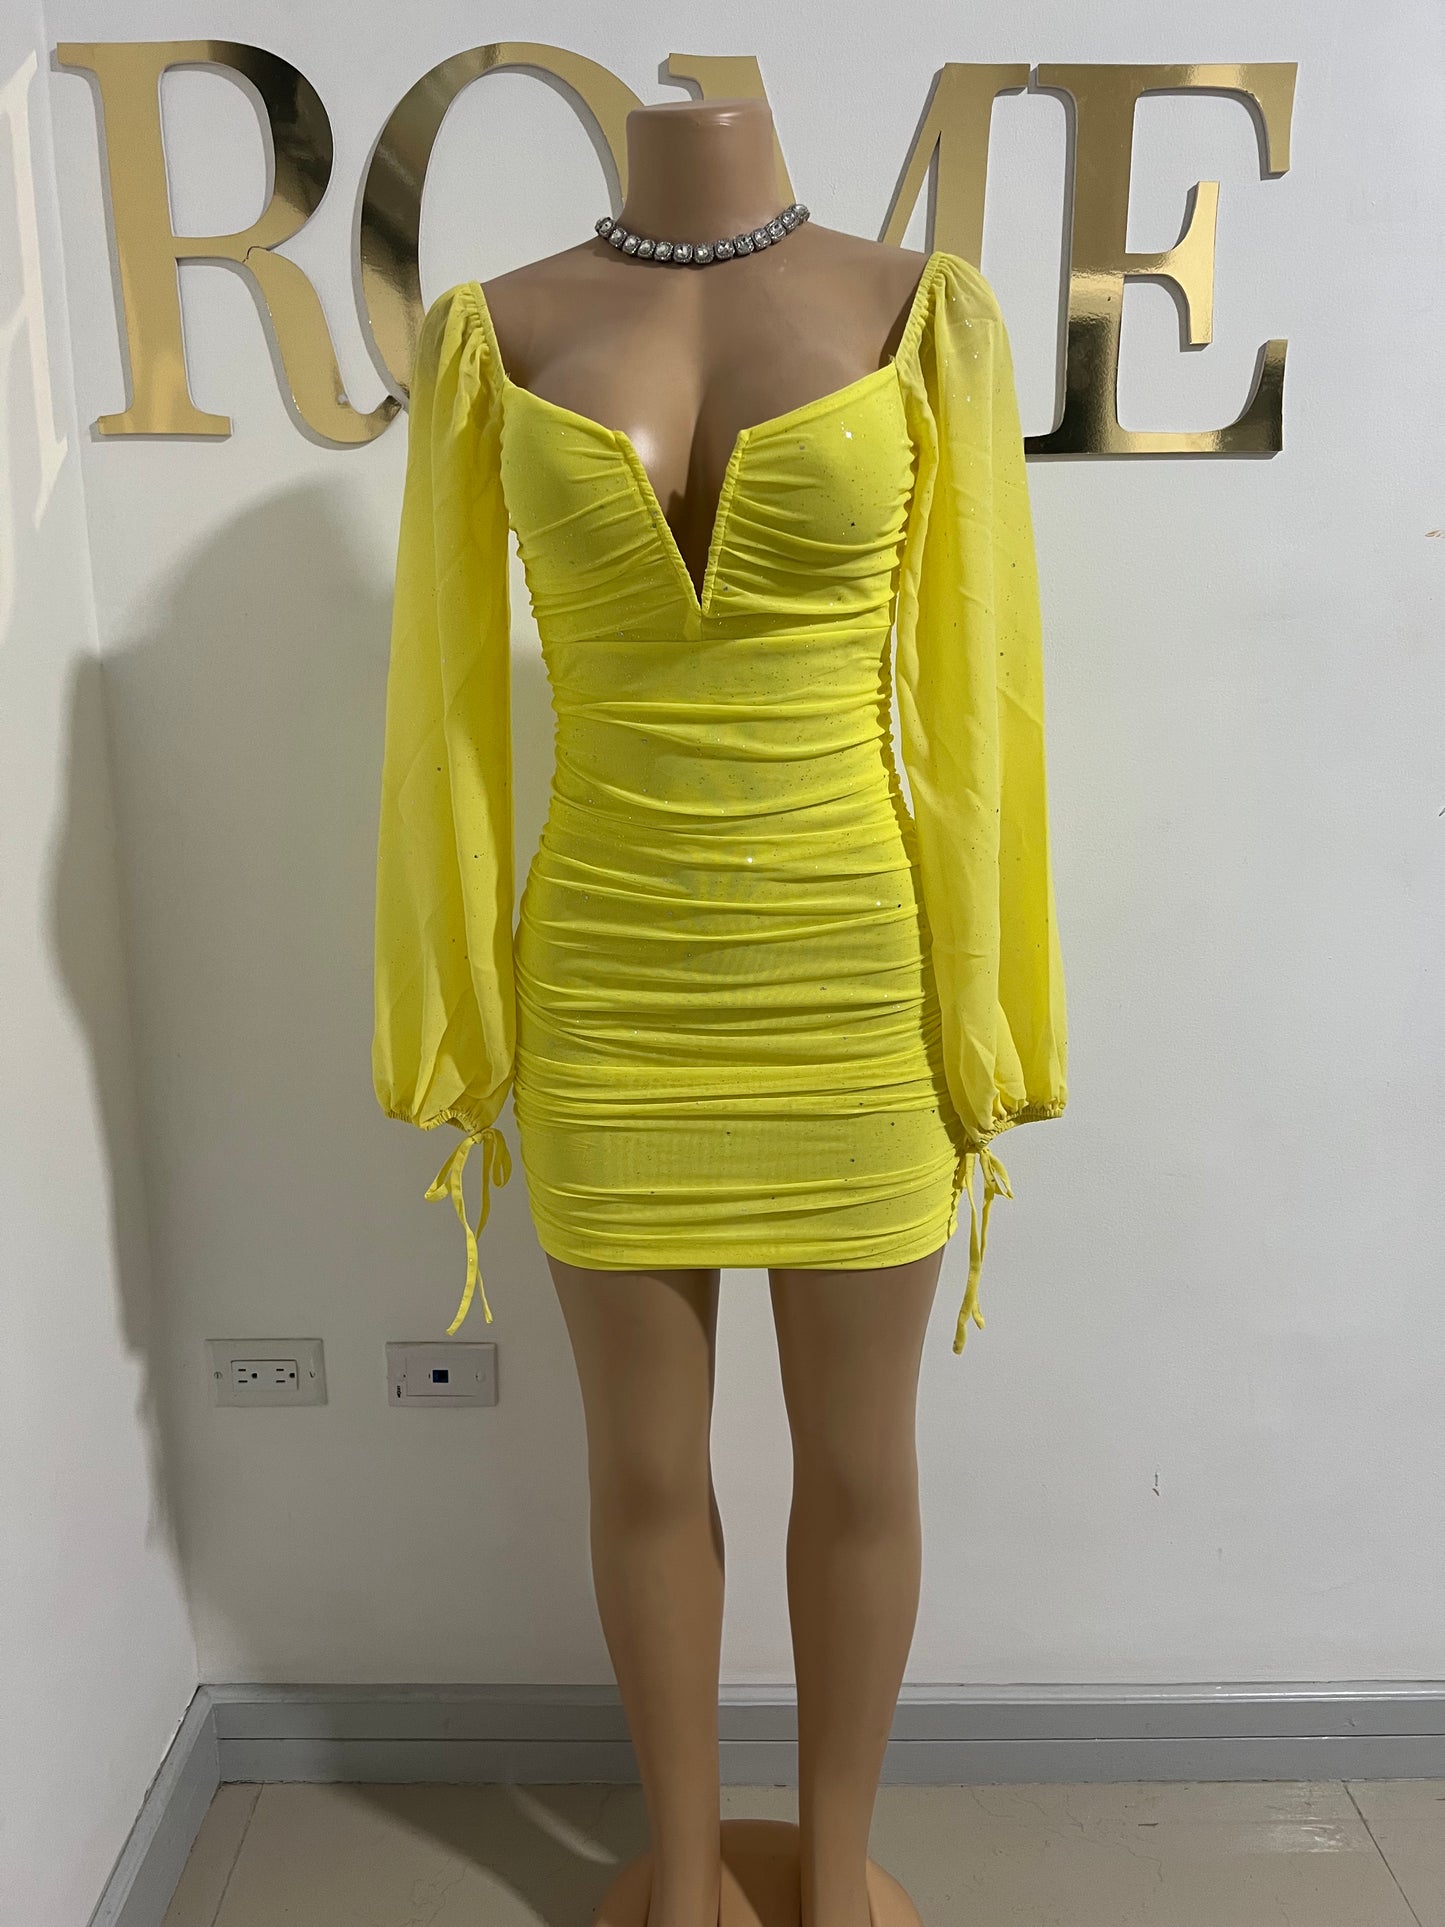 Aubrey Sprinkles Dress (Yellow)